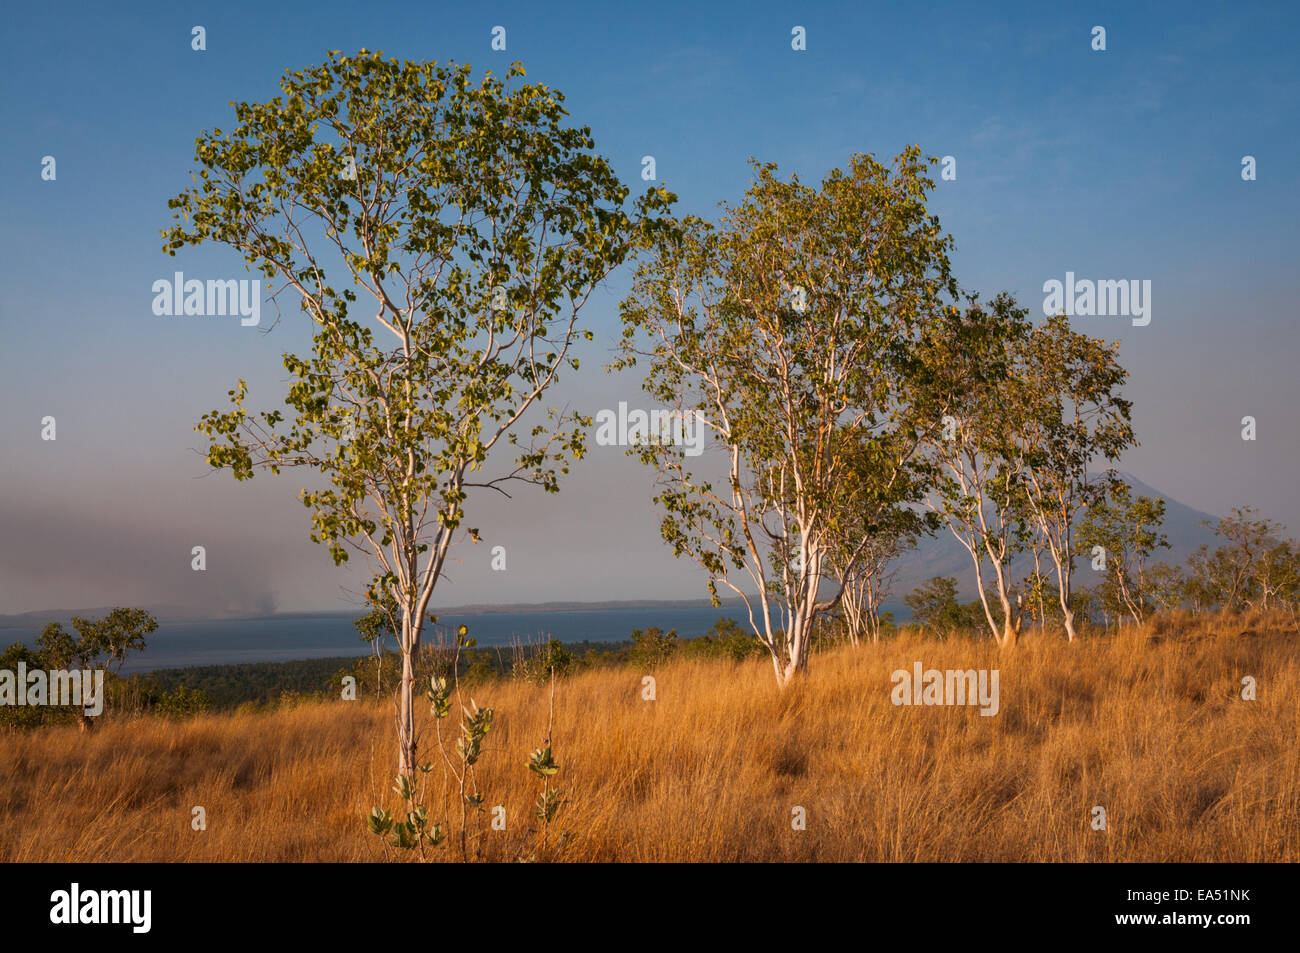 Paperbark trees on grassland during dry season in Lembata Island, Lembata, East Nusa Tenggara, Indonesia. Stock Photo